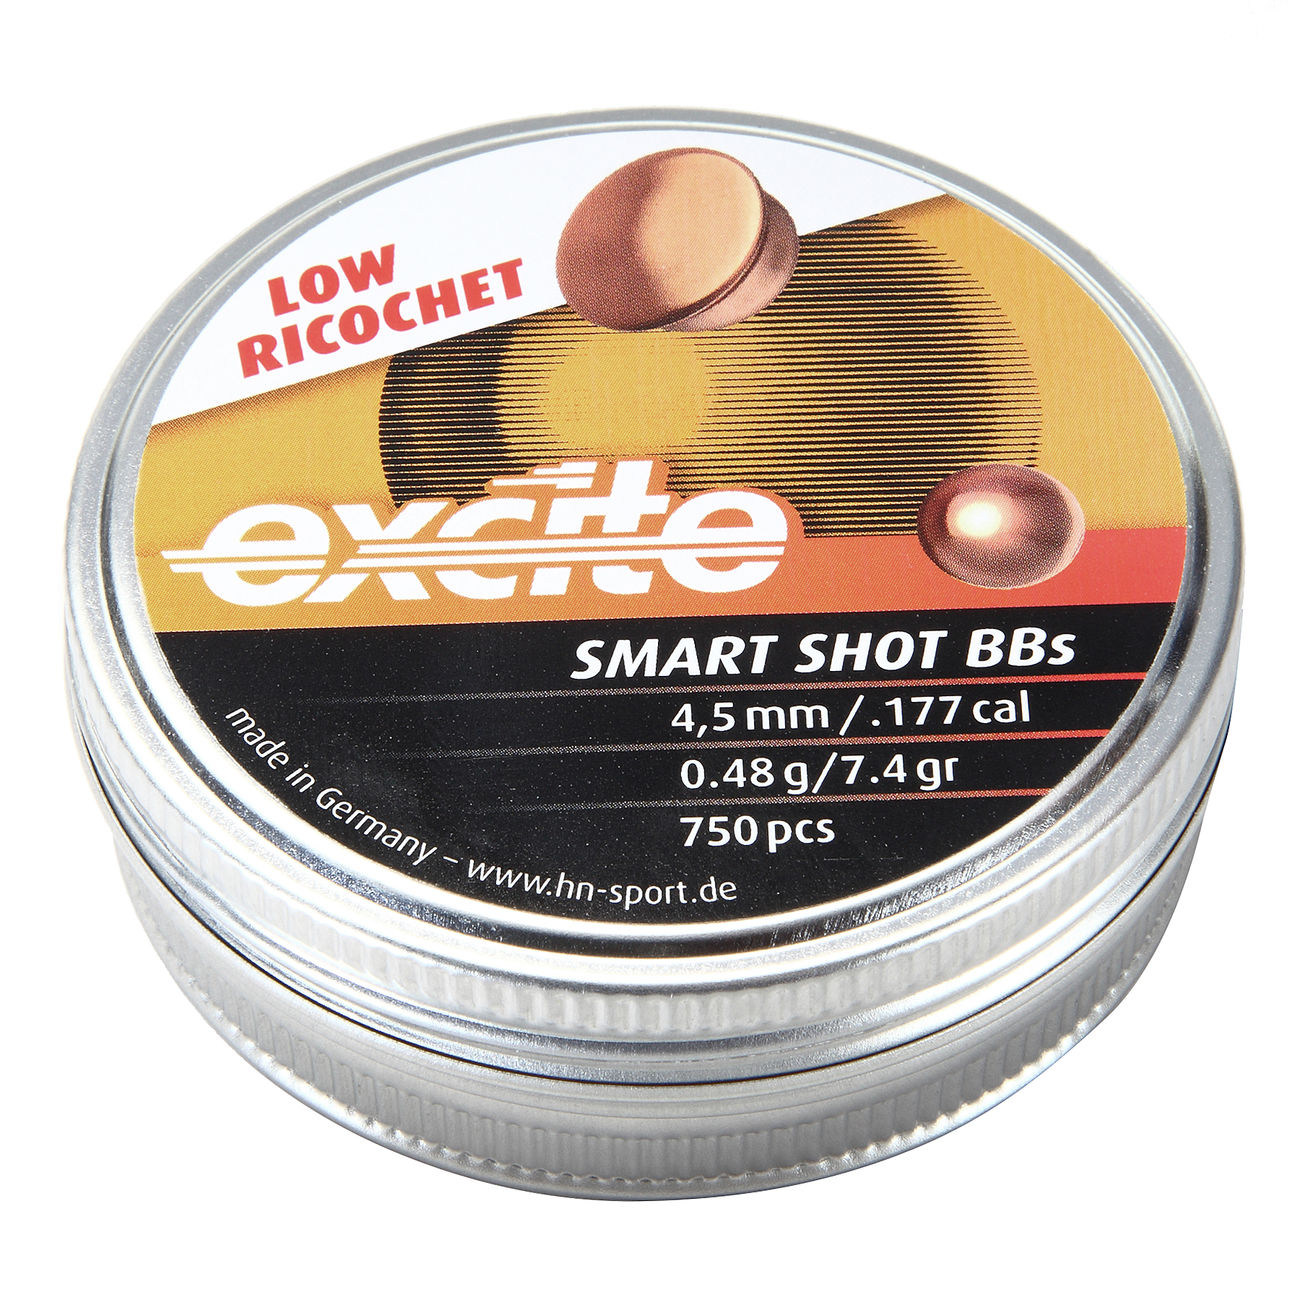 H&N Excite Smart Shot BBs 4,5mm 750 Stck Bild 1